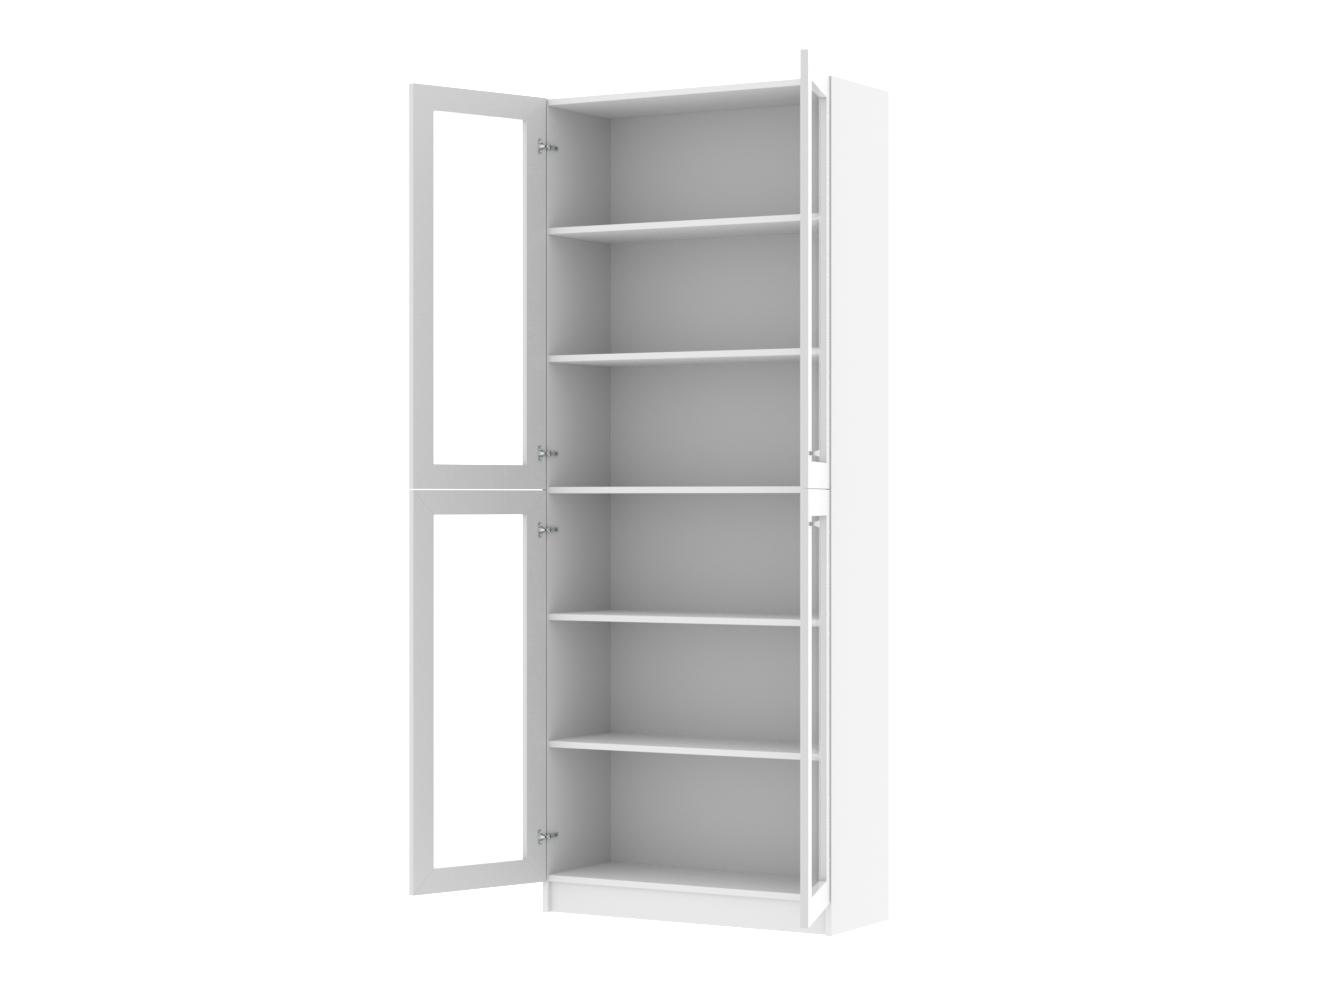  Книжный шкаф Билли 335 white ИКЕА (IKEA) изображение товара